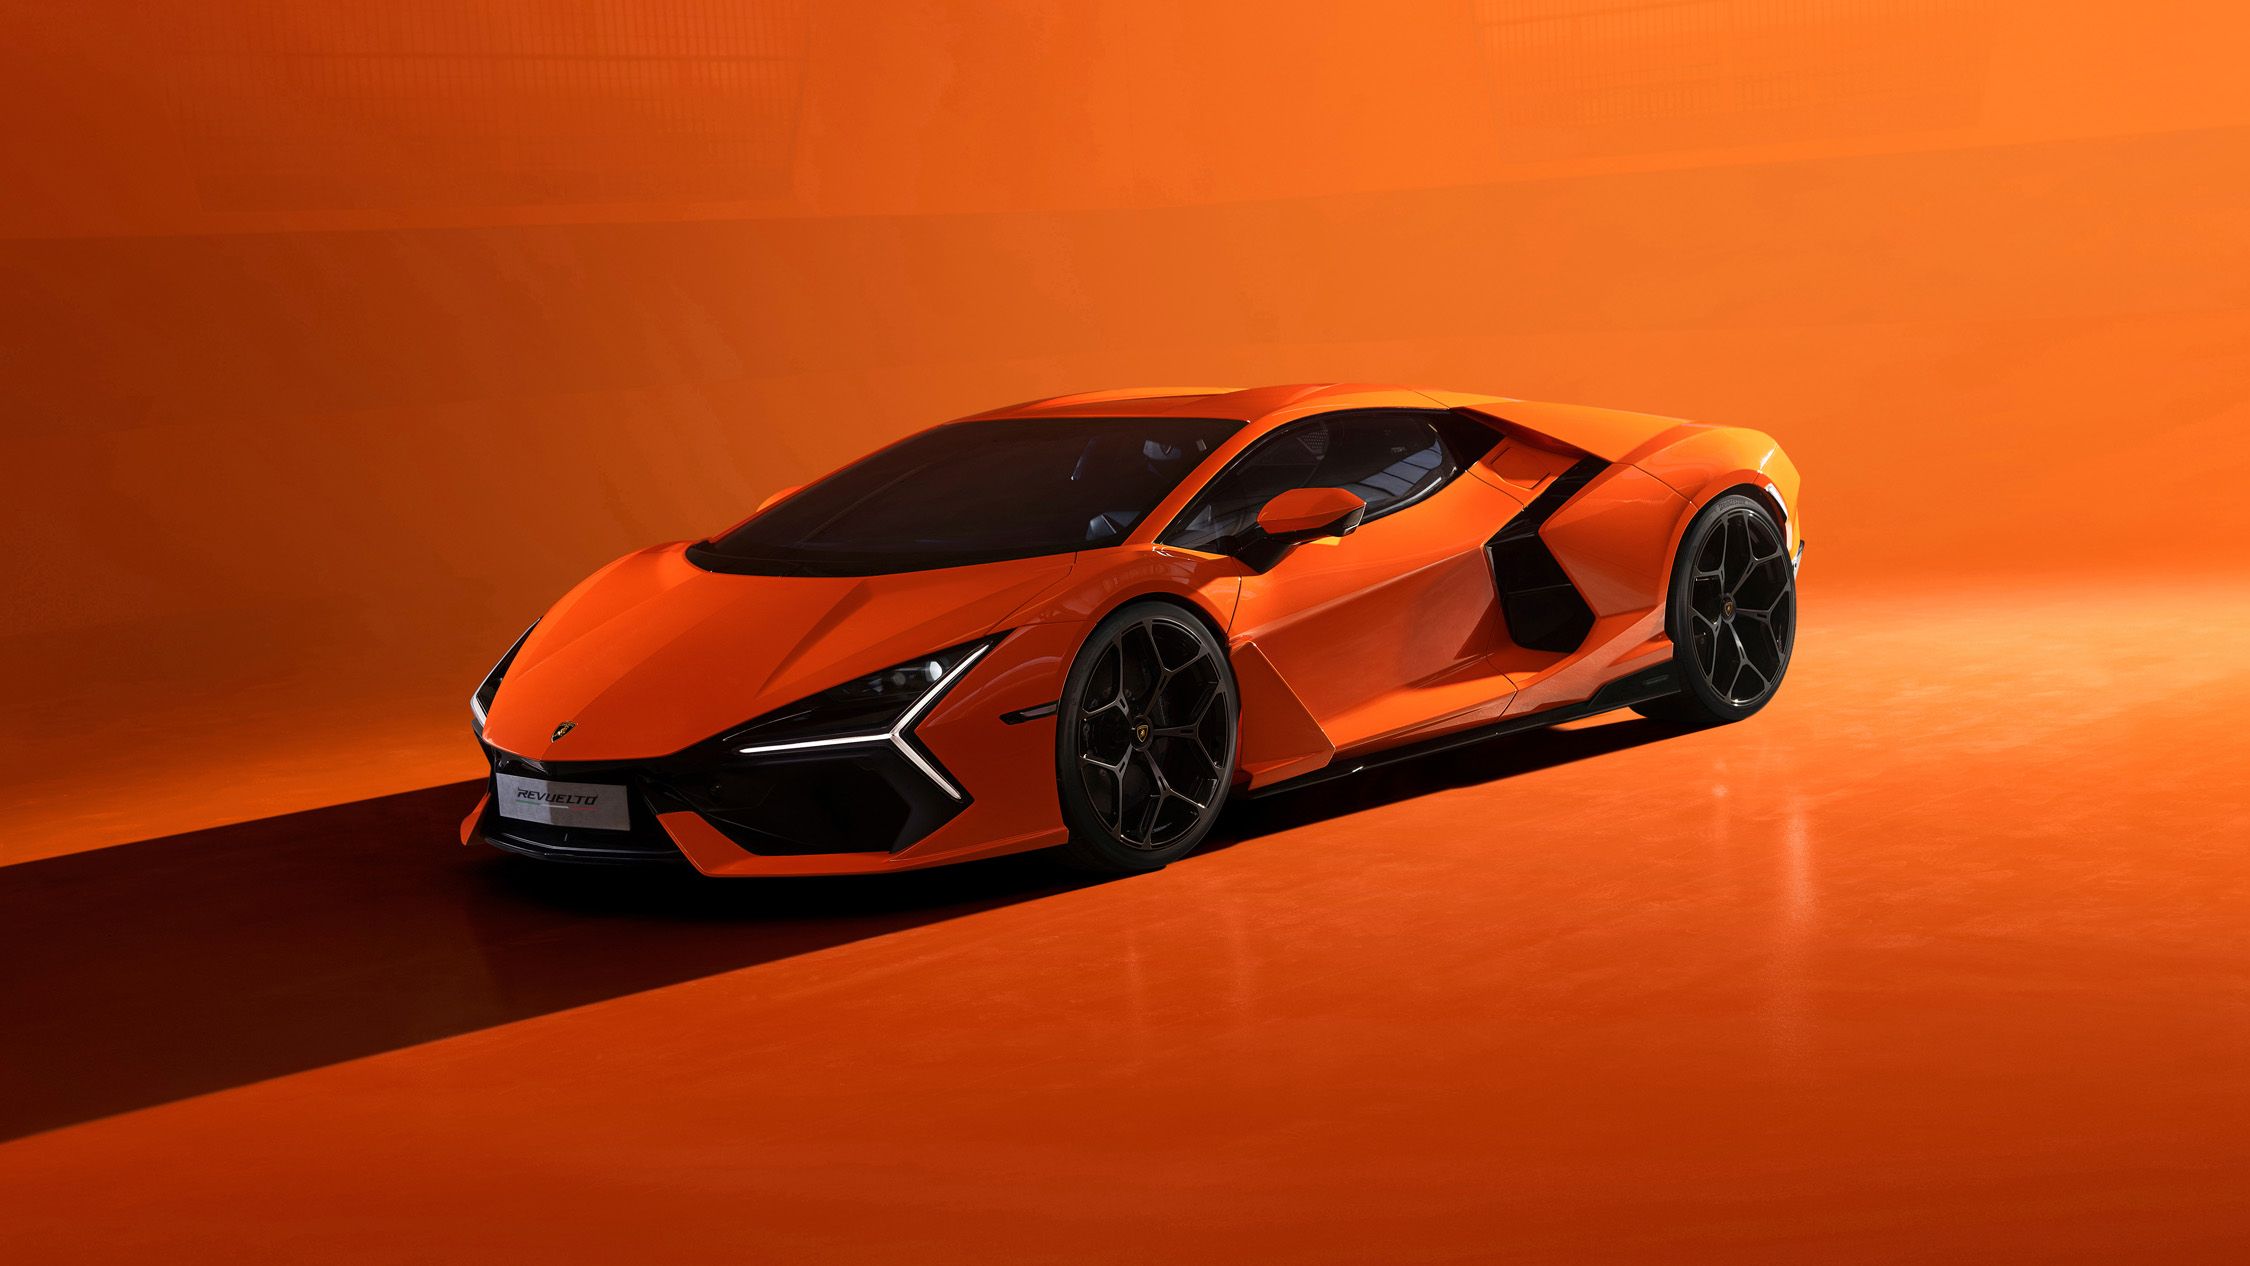 Lamborghini on X: The future we want: beautiful, powerful